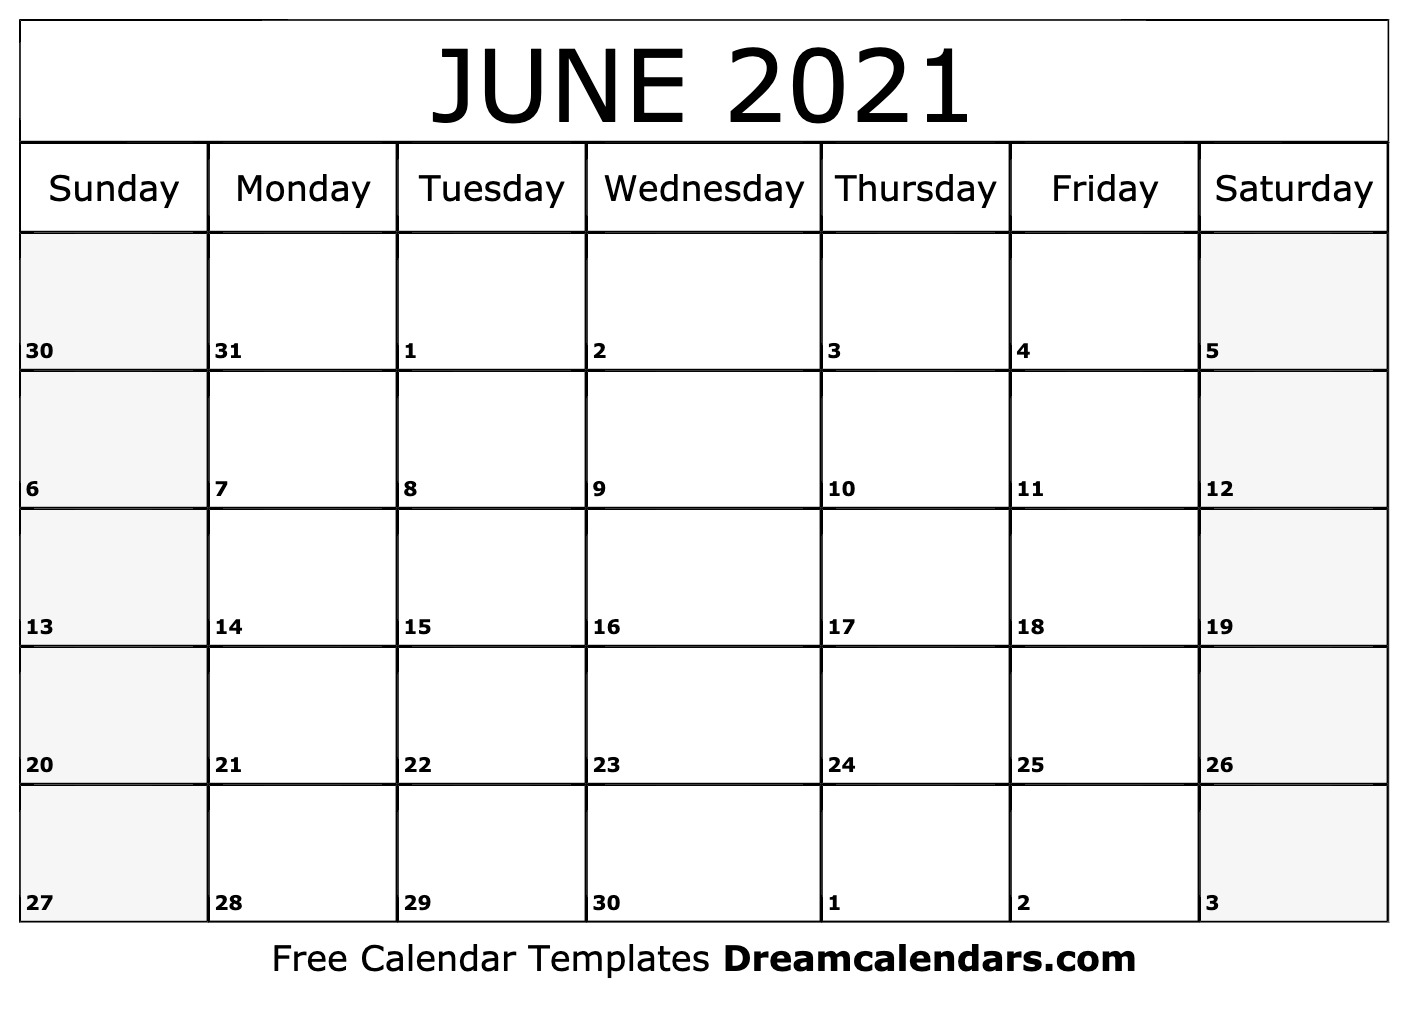 June 2021 Calendar Free Blank Printable Templates